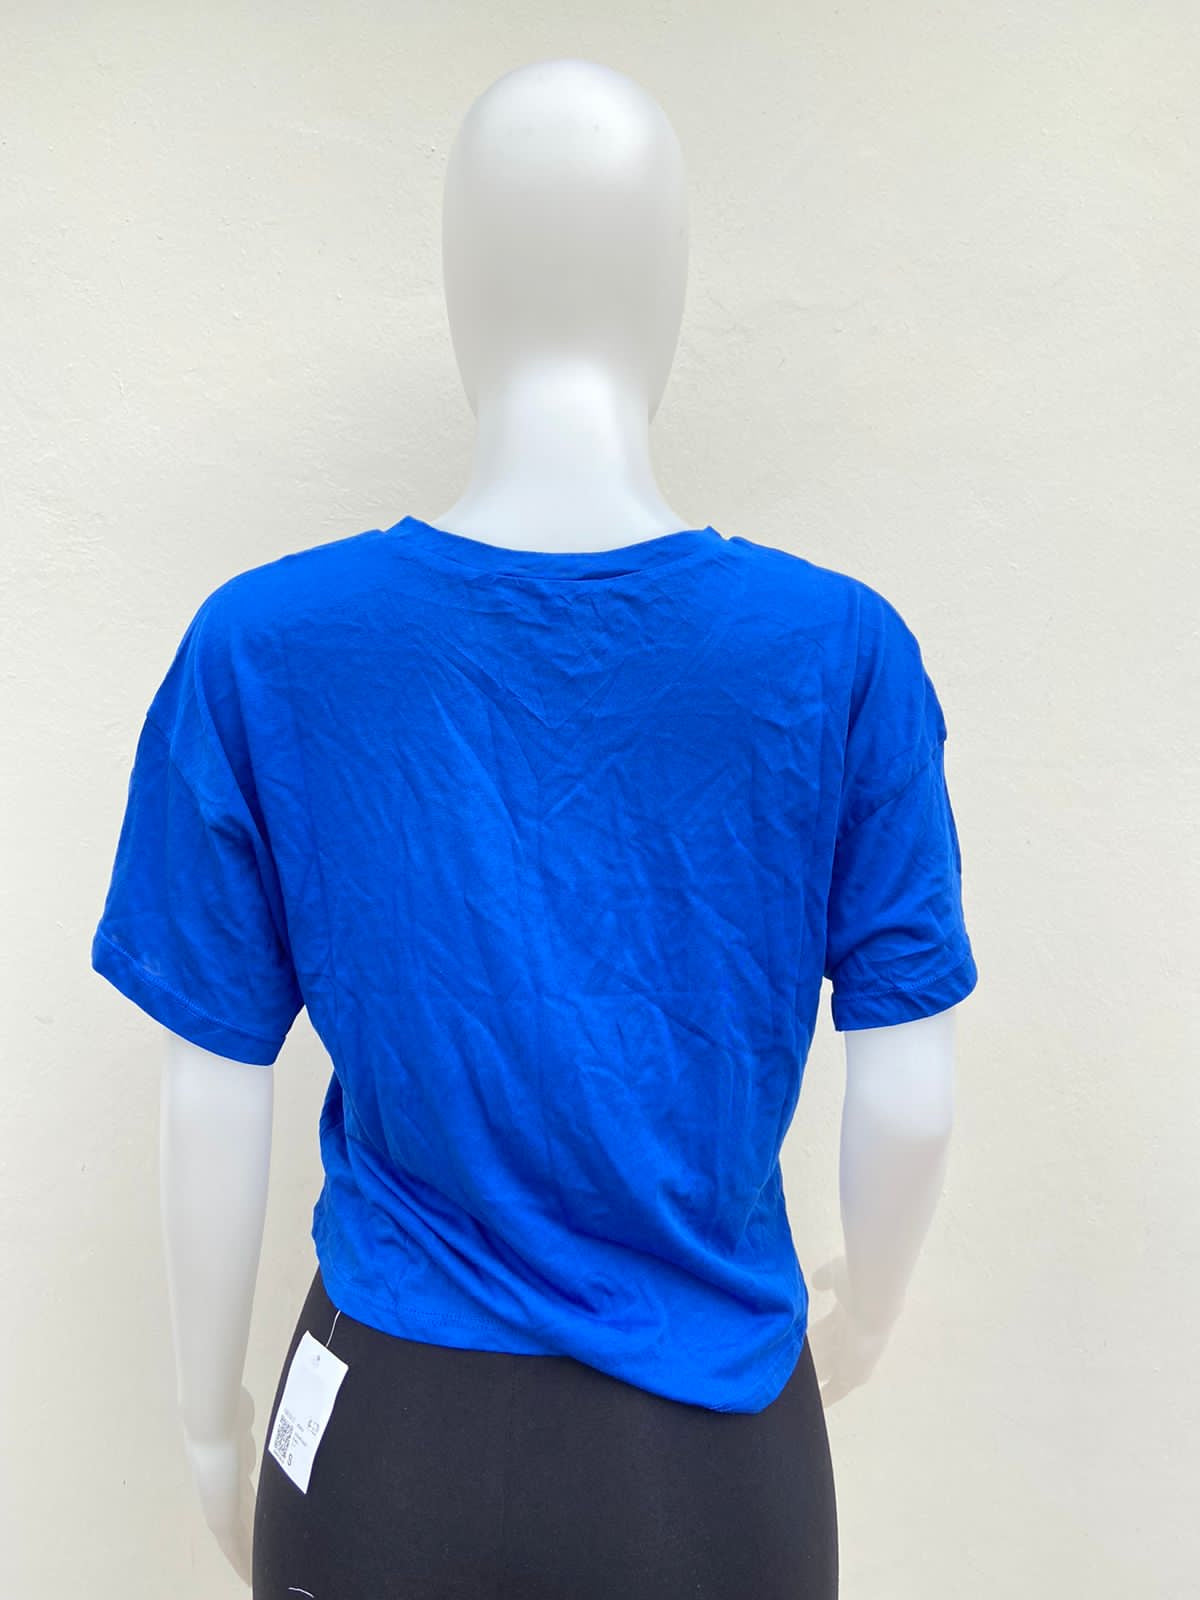 Top/ t-shirt AMBIANCE original, liso azul marino.